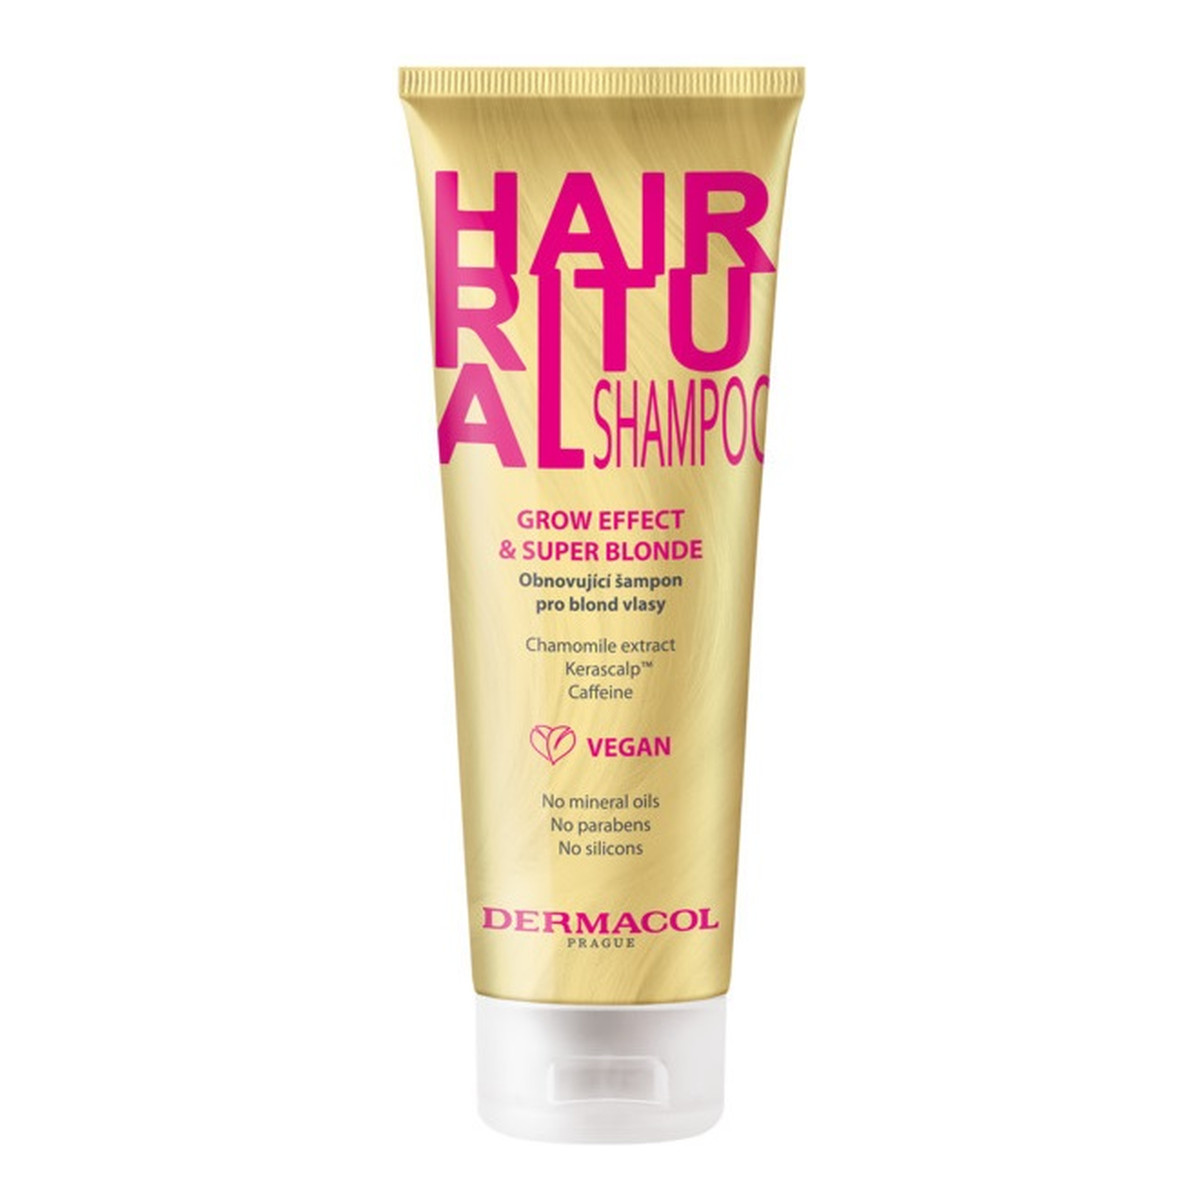 Dermacol Hair ritual shampoo szampon do włosów blond grow effect & super blonde 250ml